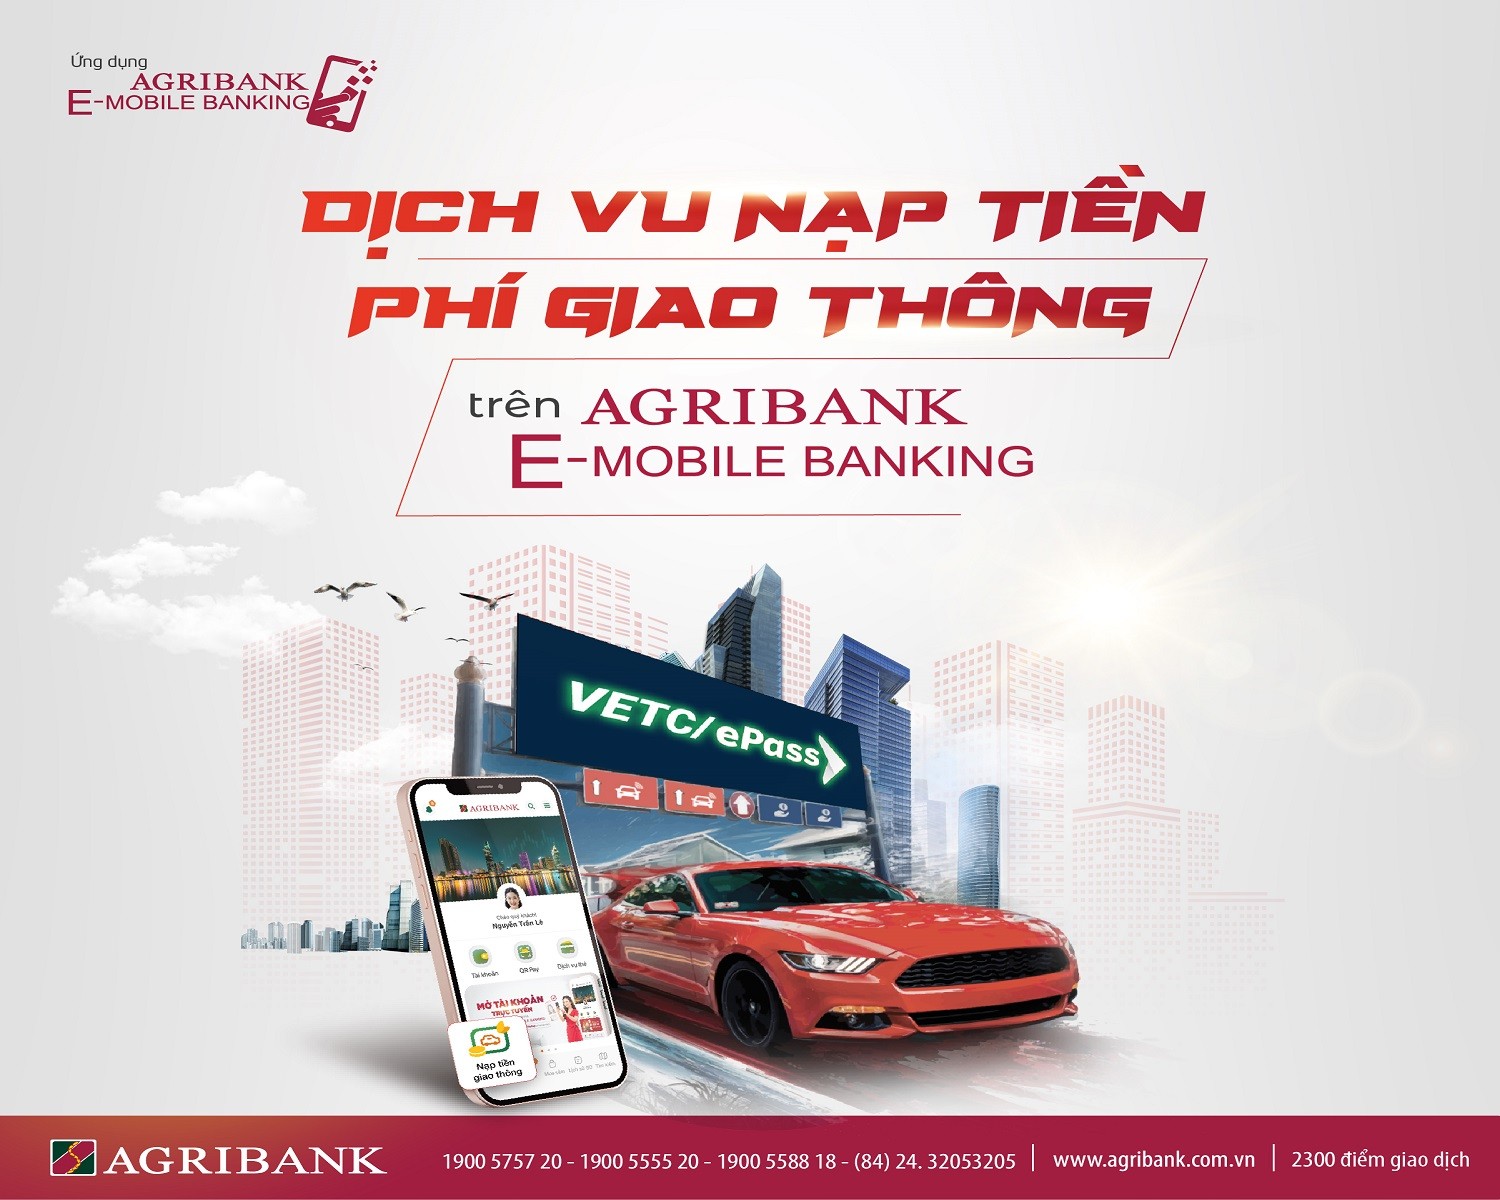 Agribank trien khai them dich vu nap tien vao tai khoan giao thong VETC va EPASS tren ung dung Agribank E-Mobile Banking